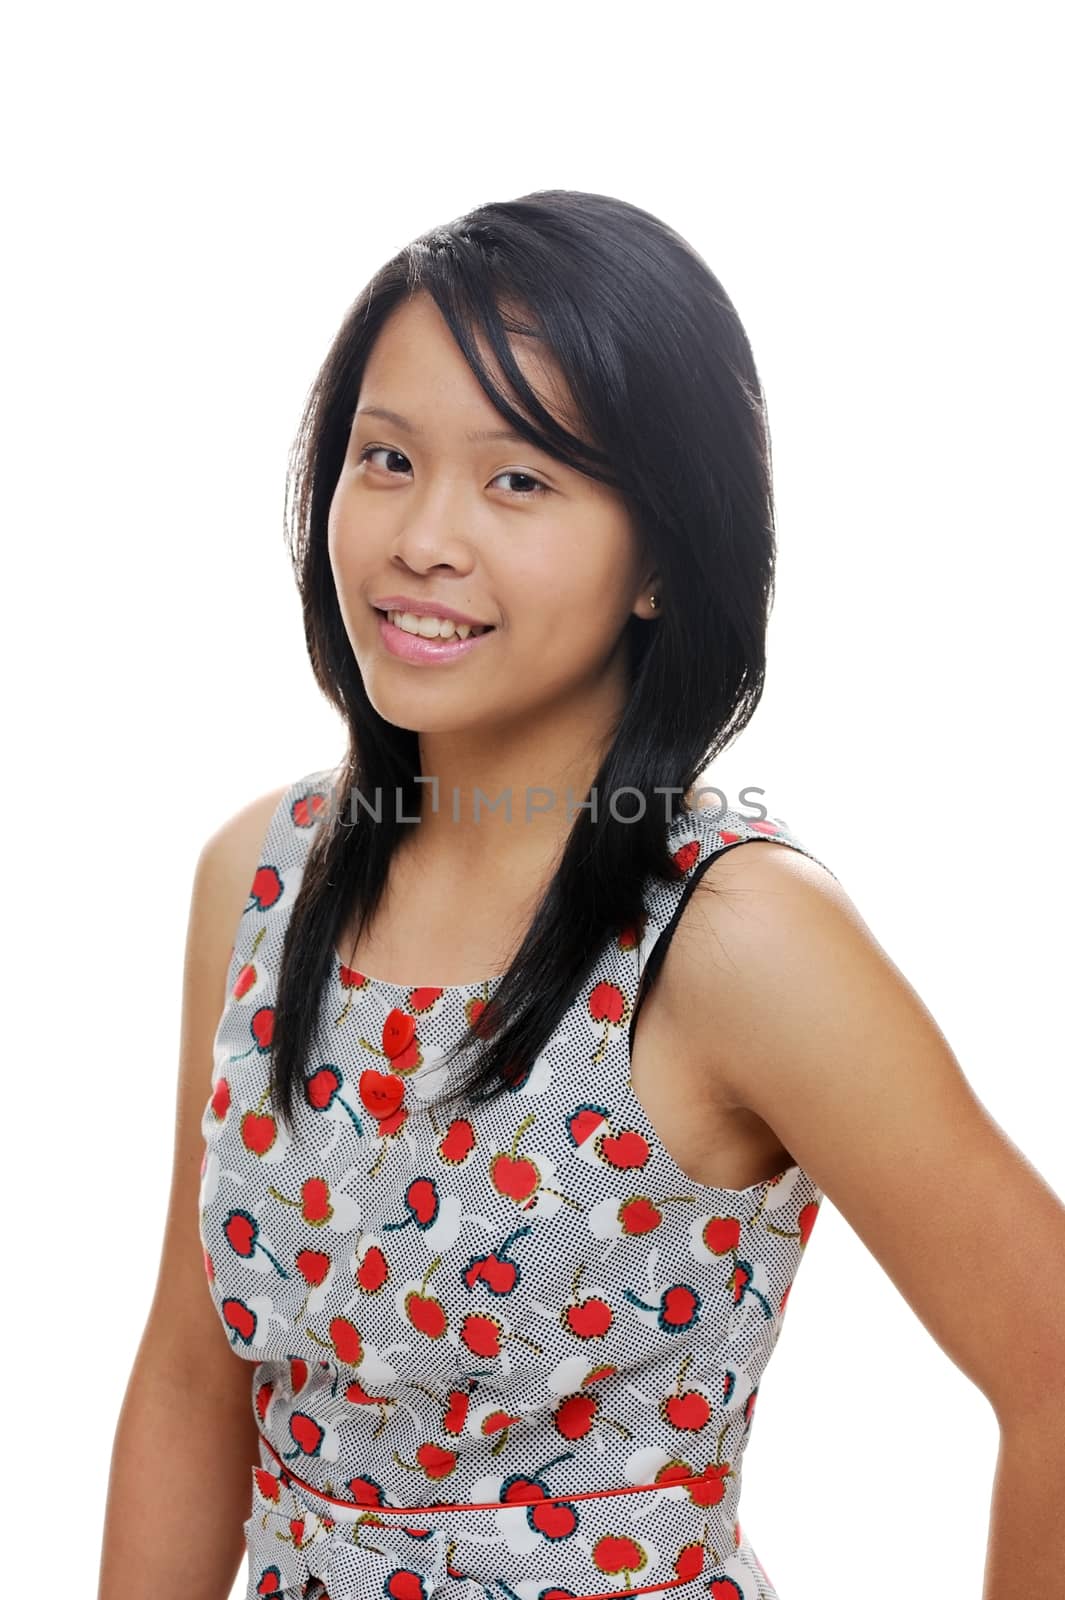 Asian girl looks happy in cherry dress